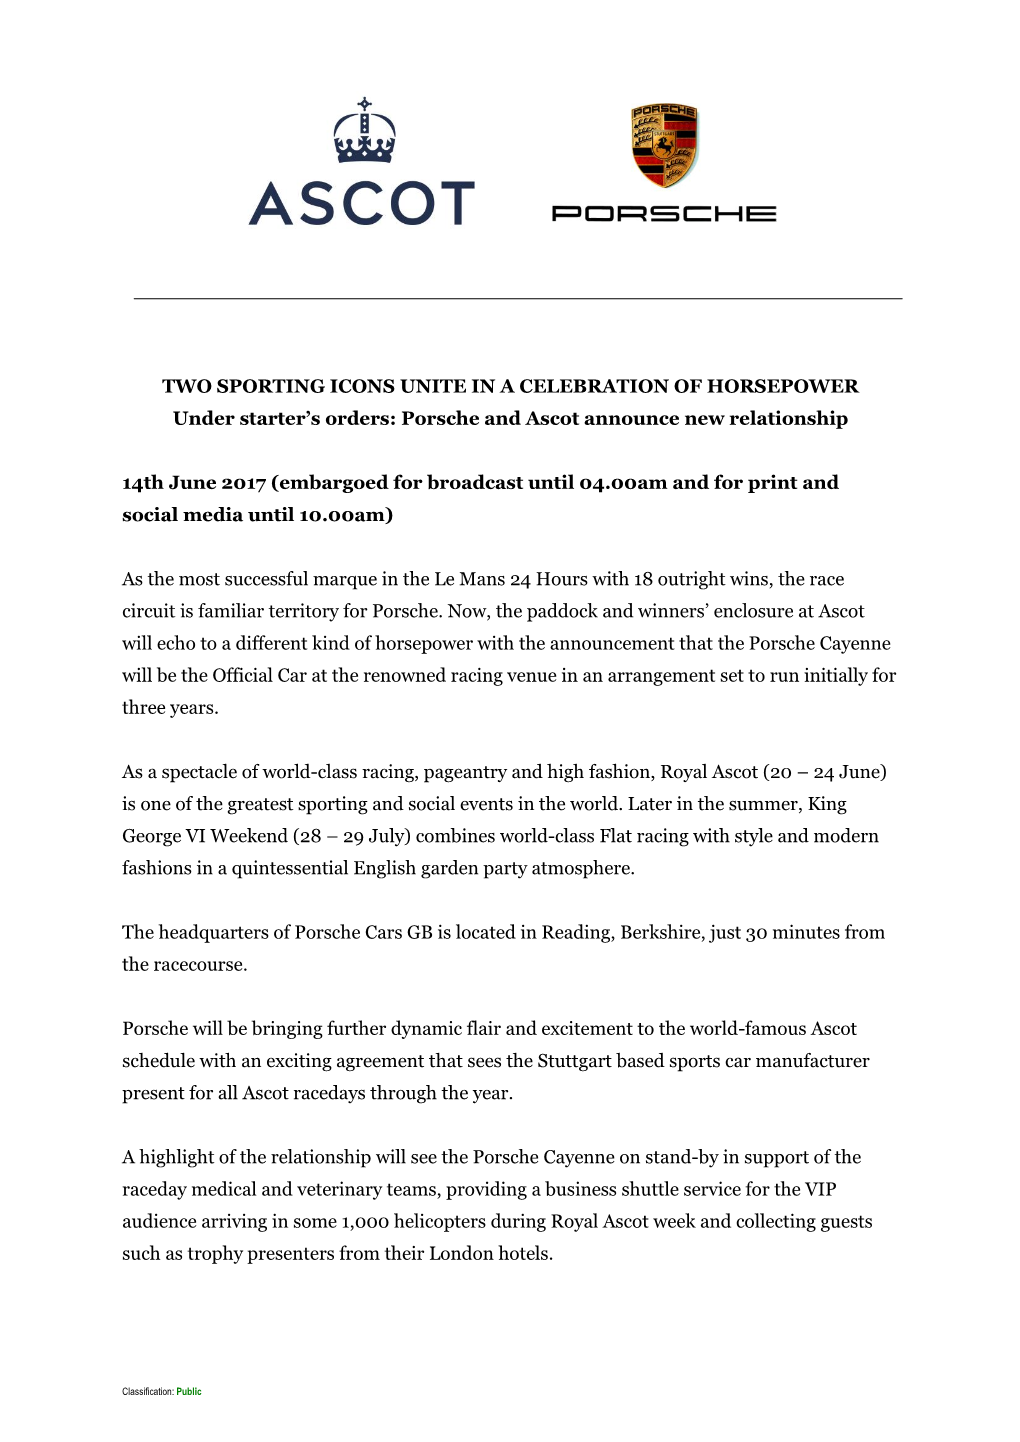 Porsche and Ascot Announce New Relationship 14